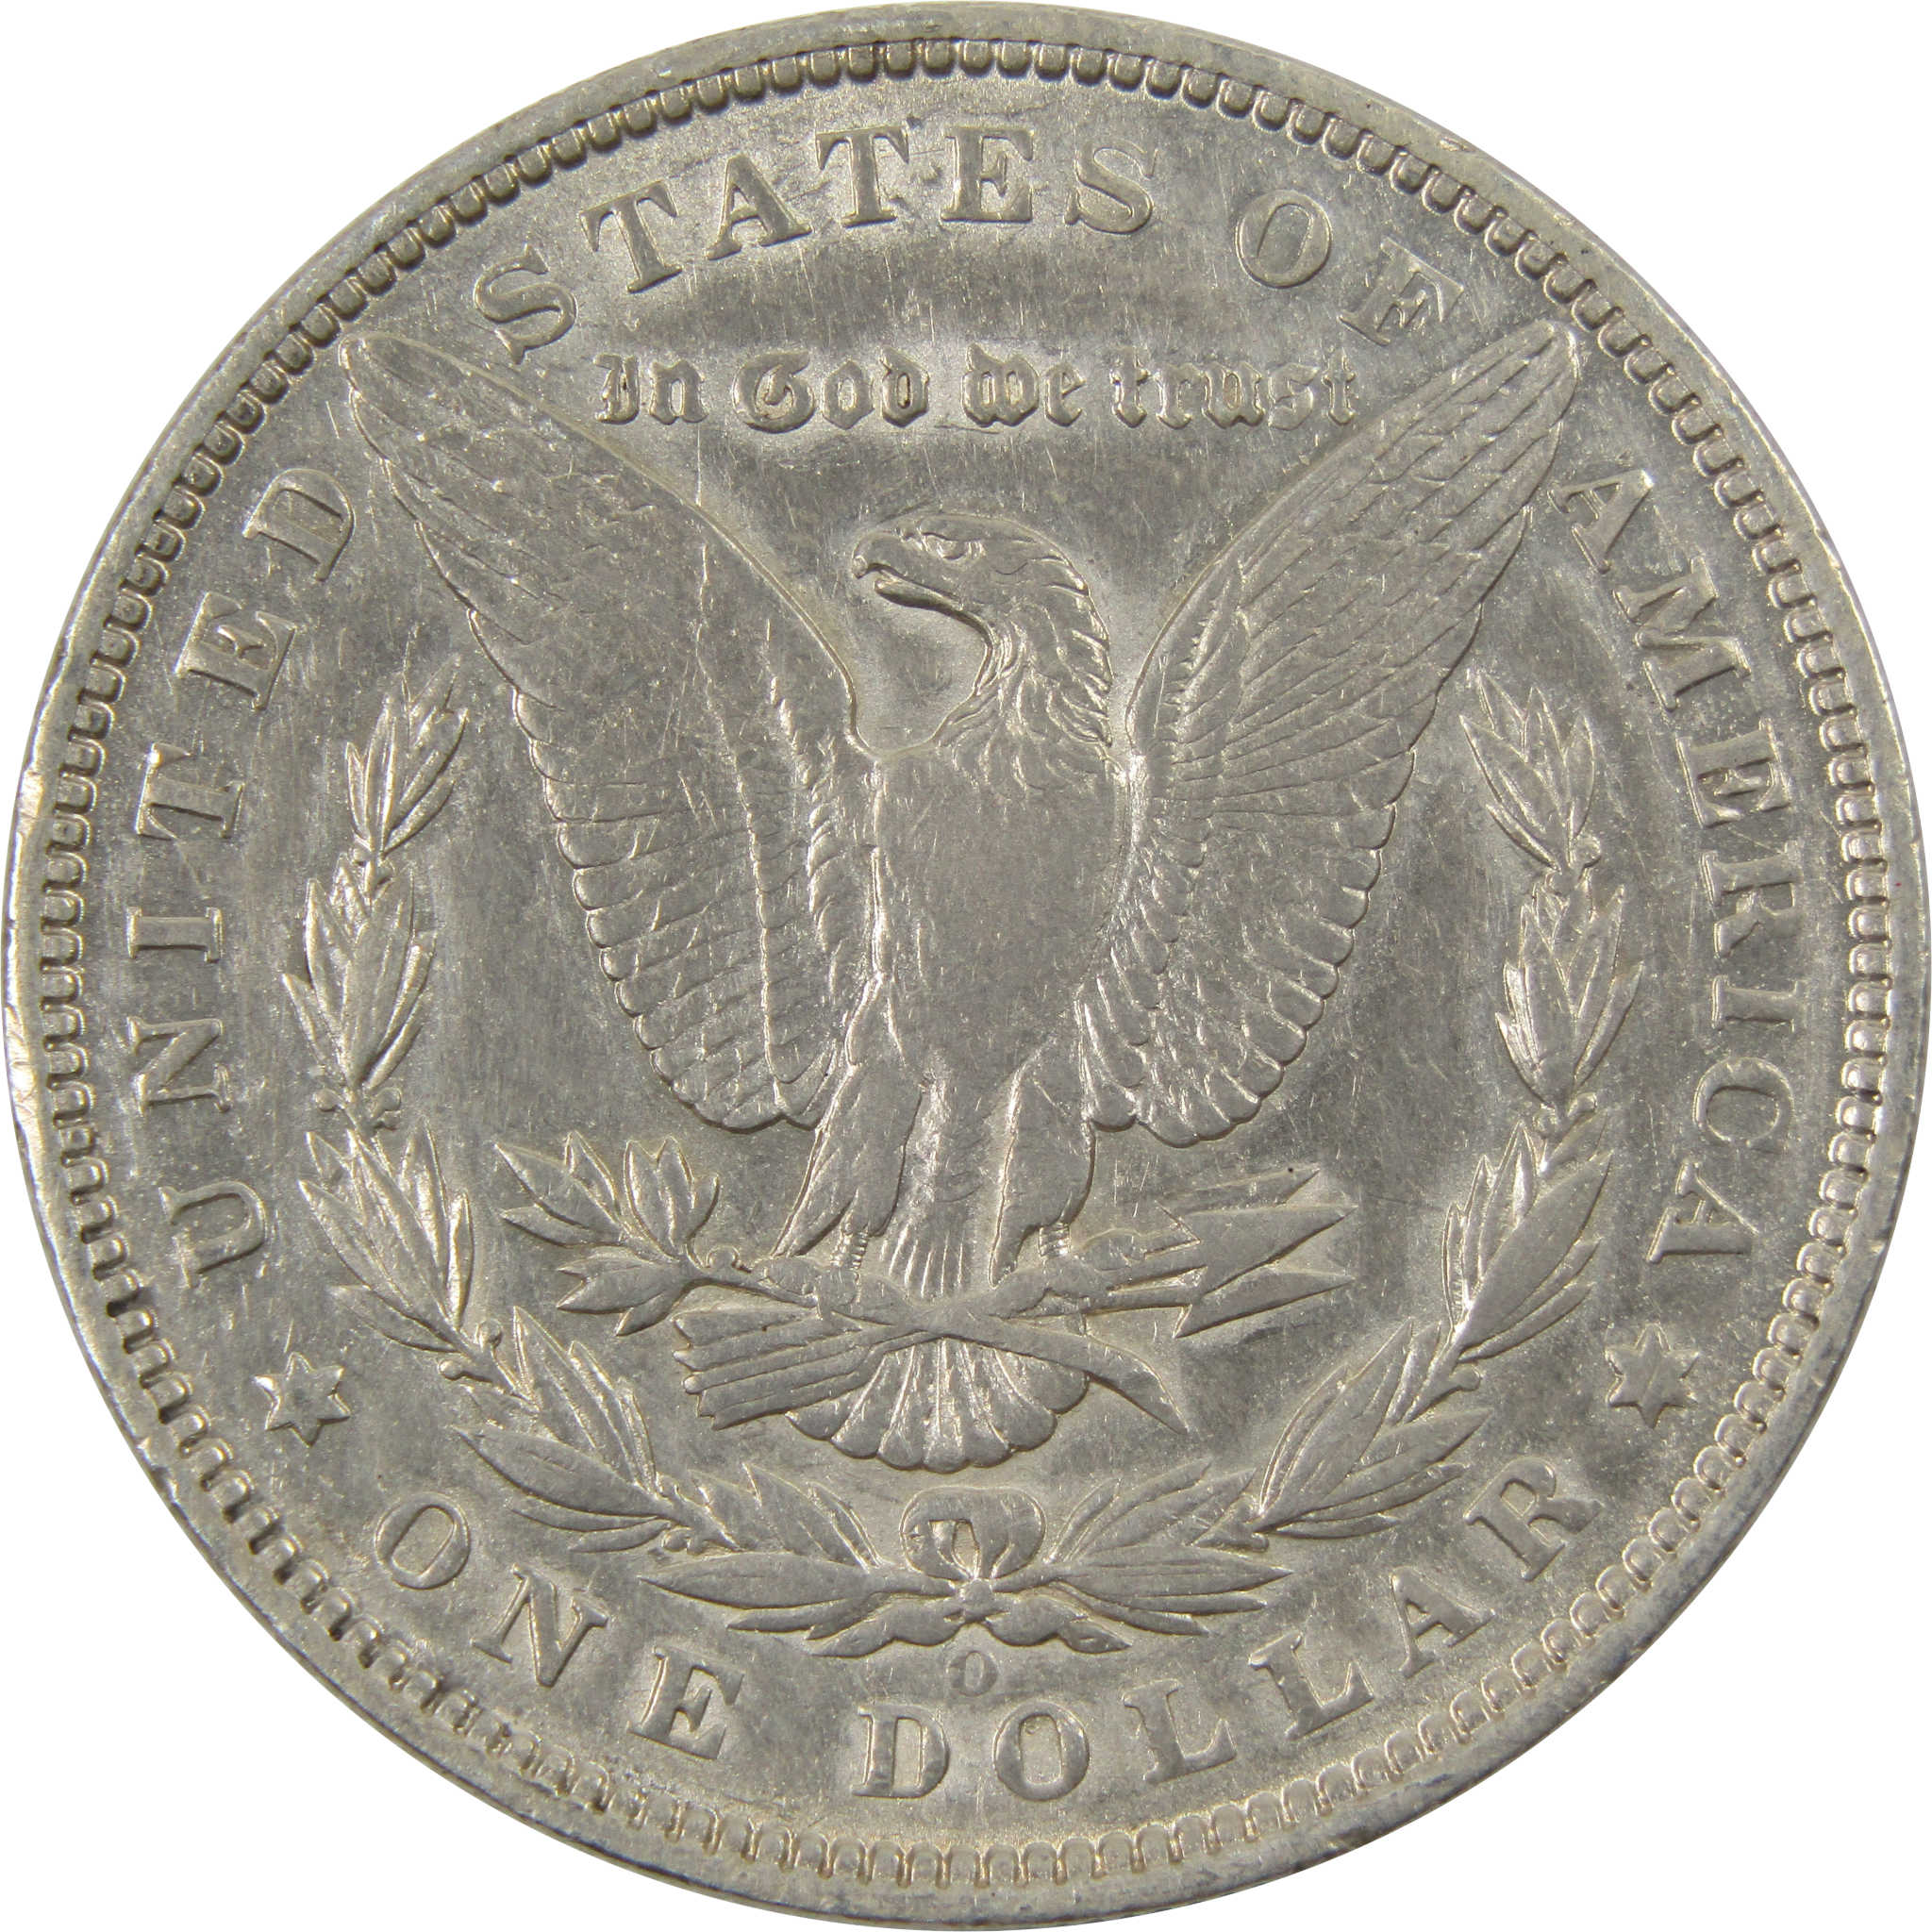 1892 O Morgan Dollar AU About Uncirculated Details Silver $1 SKU:I9629 - Morgan coin - Morgan silver dollar - Morgan silver dollar for sale - Profile Coins &amp; Collectibles